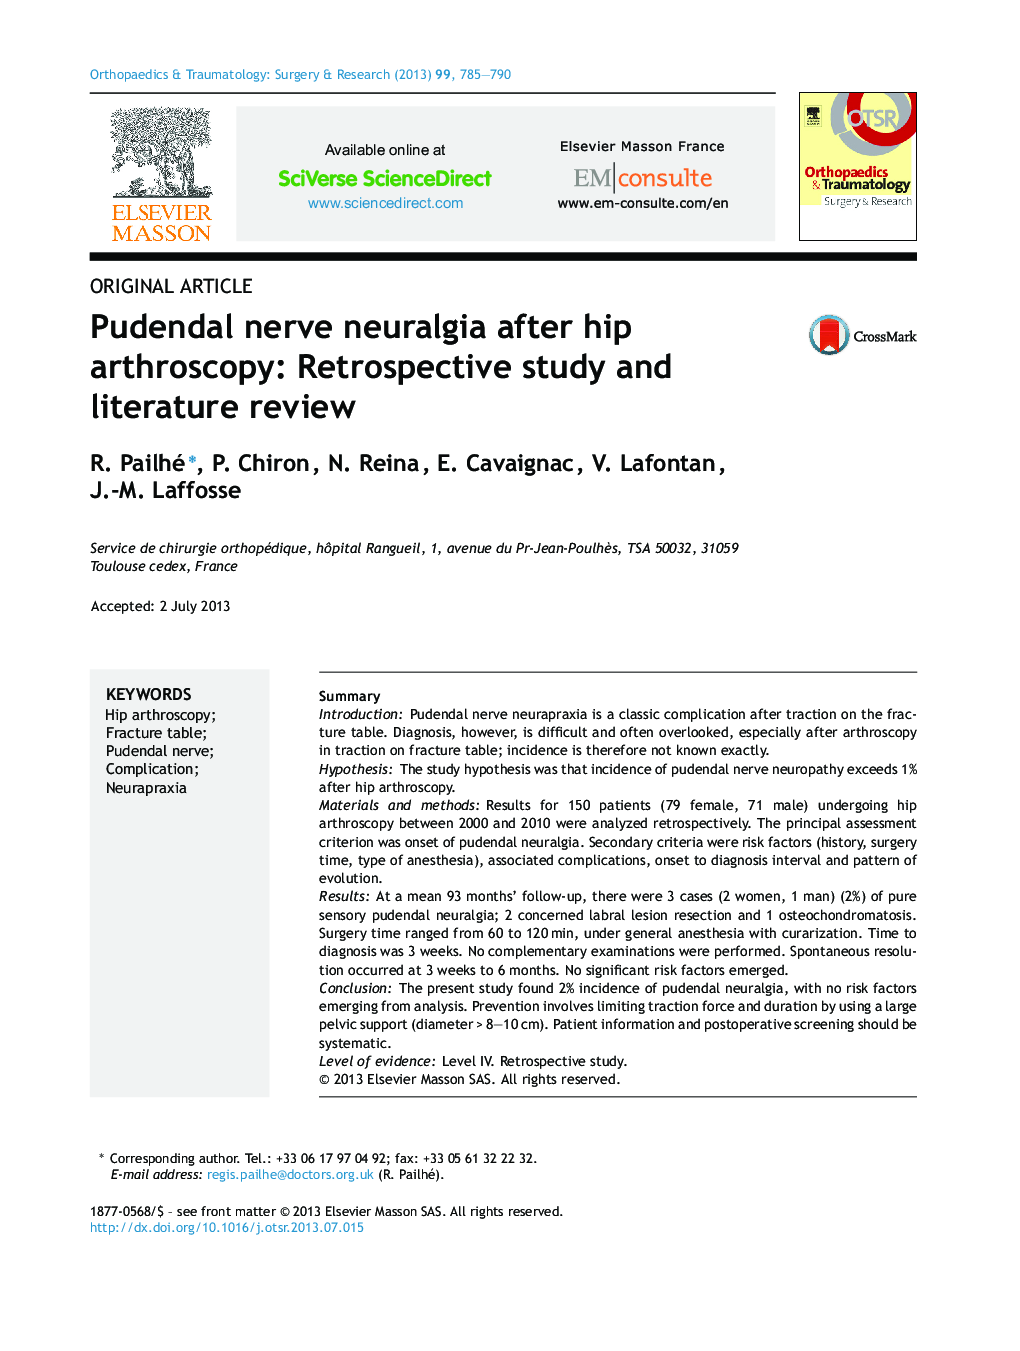 Pudendal nerve neuralgia after hip arthroscopy: Retrospective study and literature review